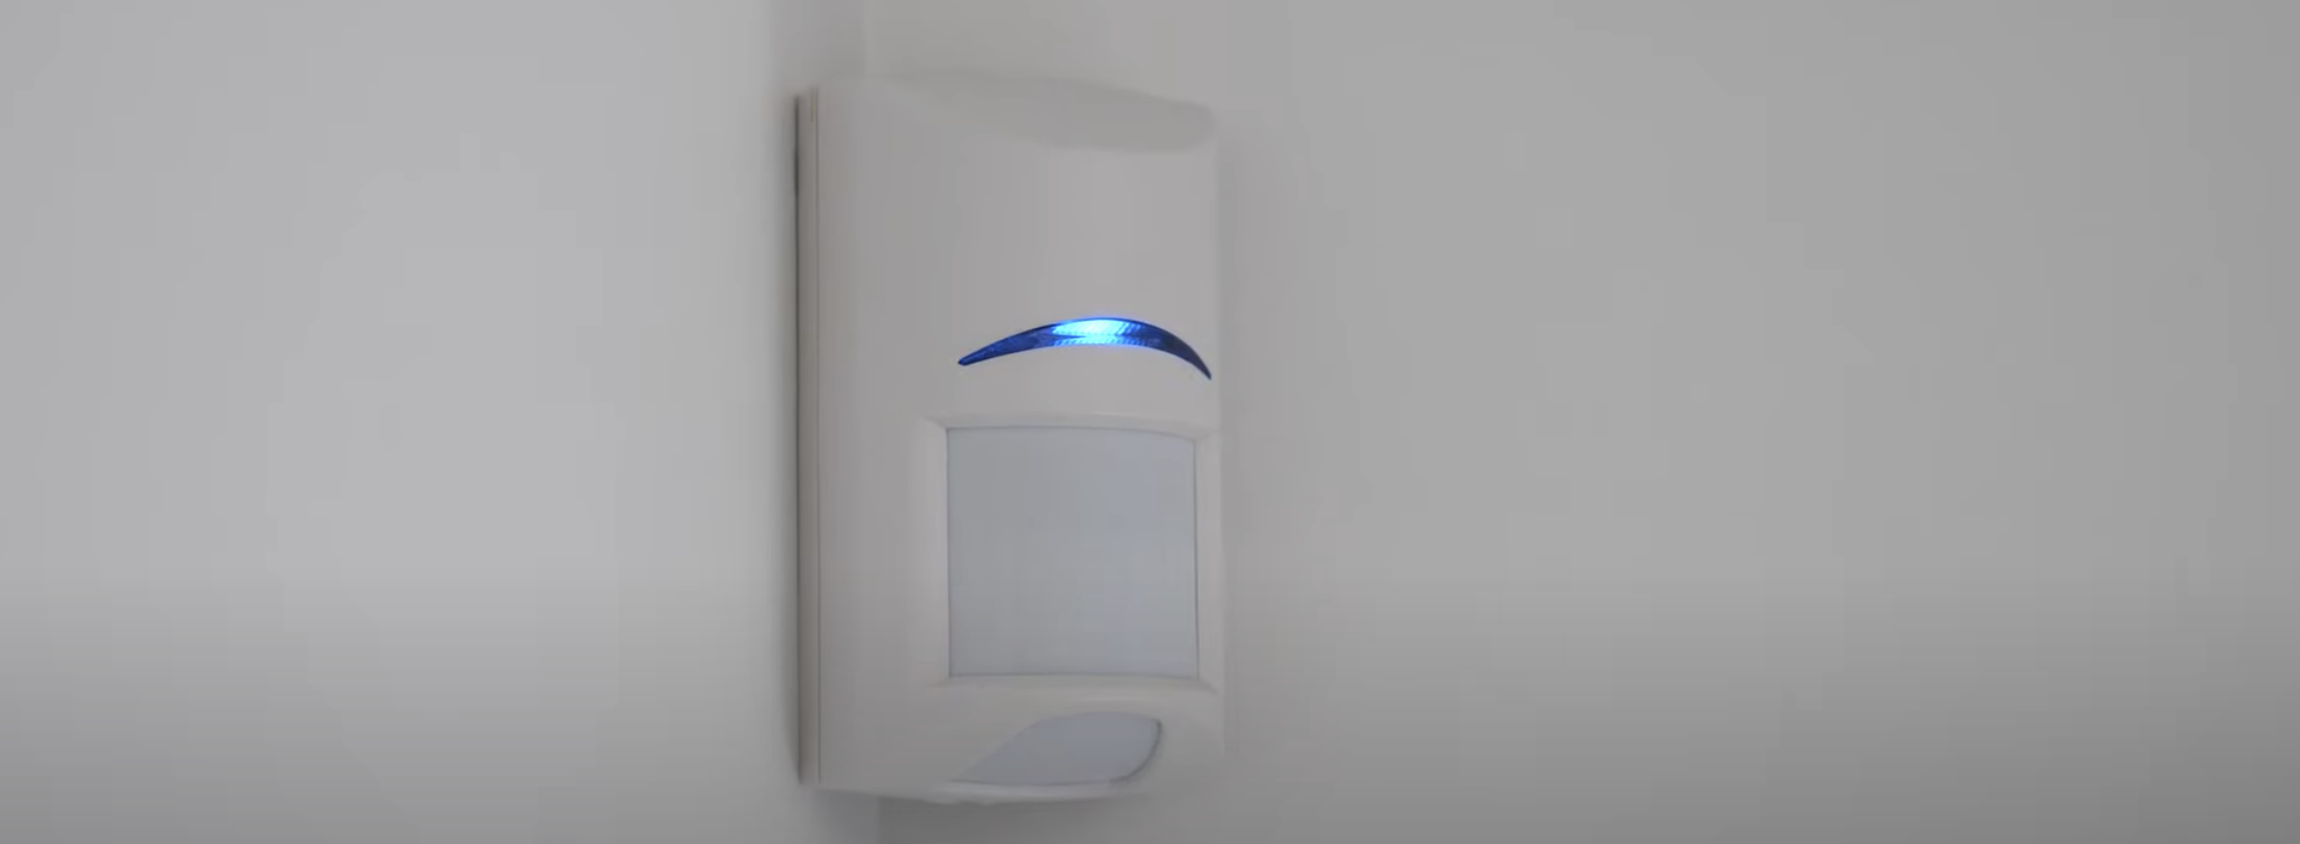 Burglar alarm mounted in corner of room.